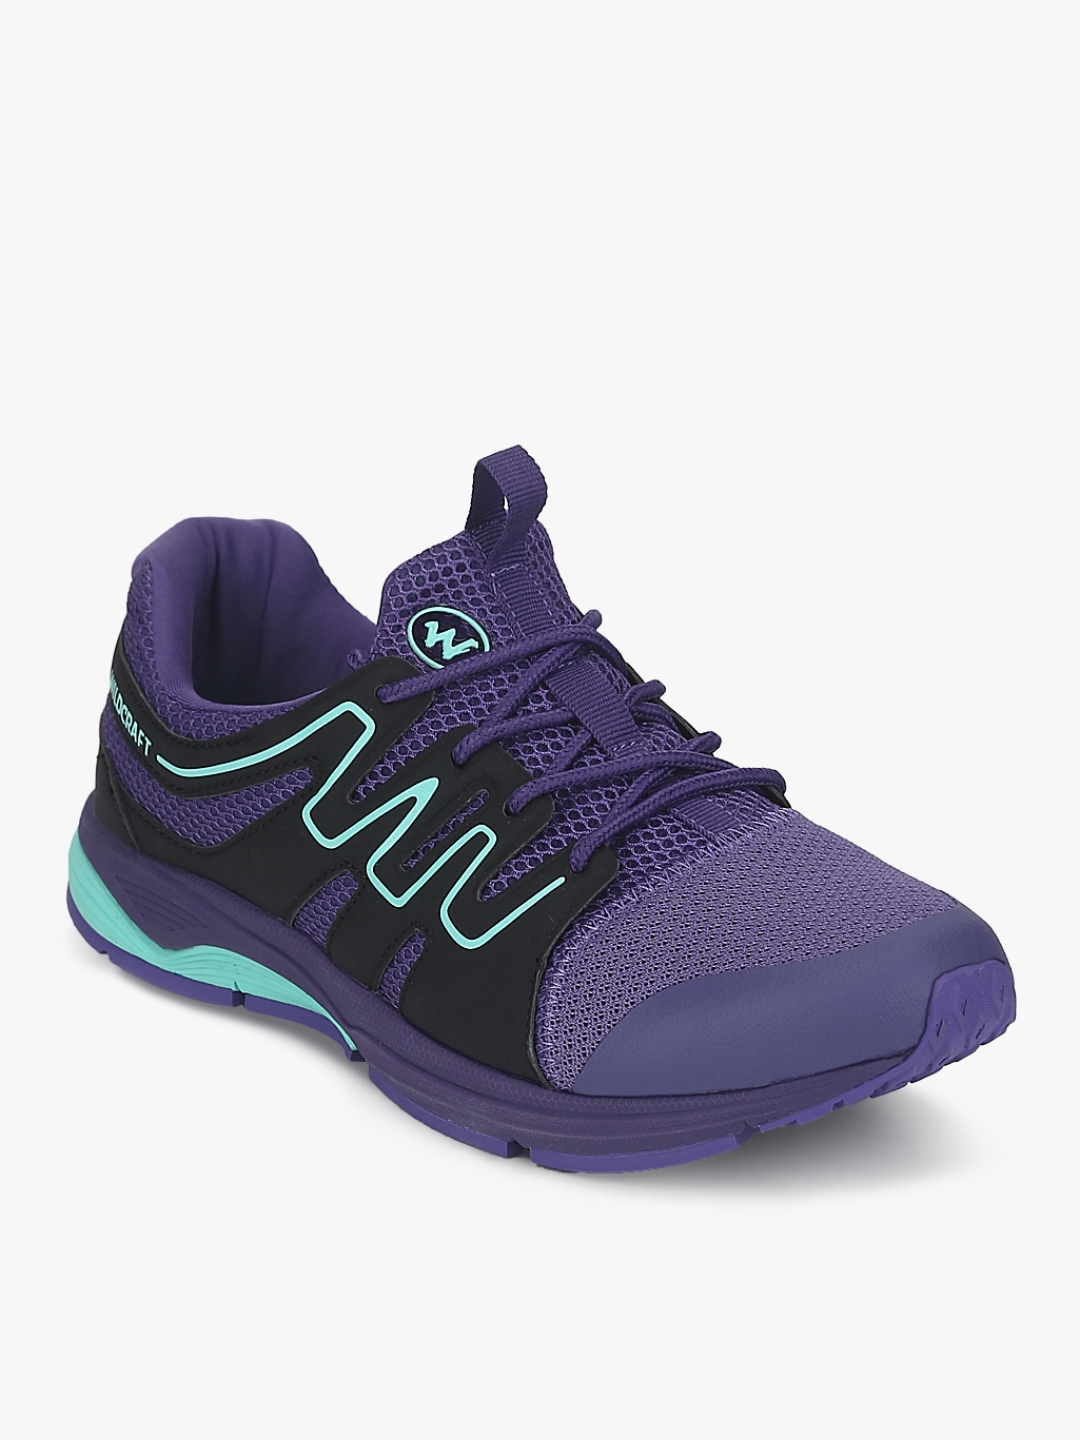 Buy Wildcraft Women Purple Running Shoes - Sports Shoes for Women ...